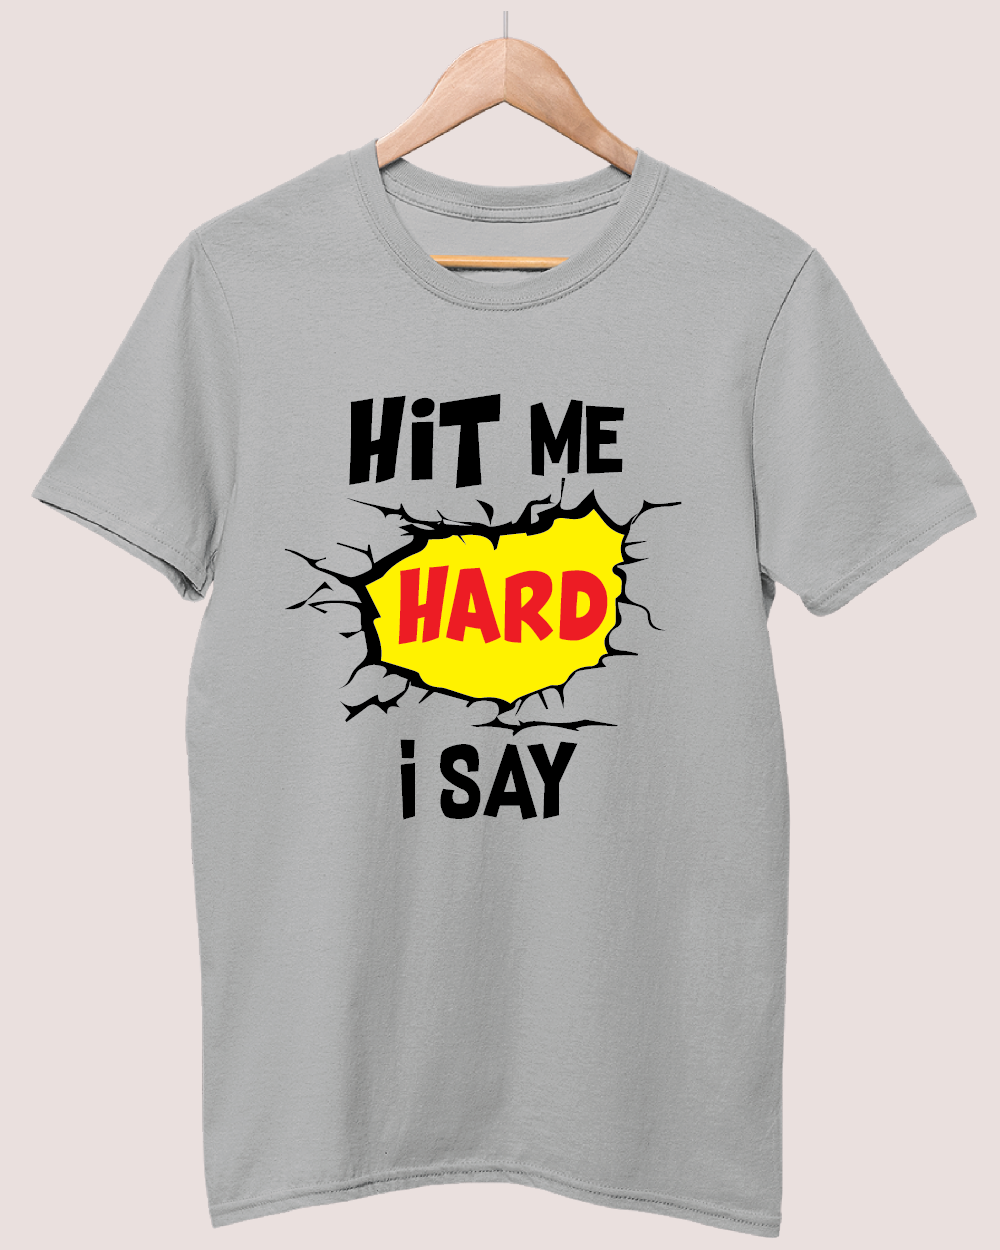 Hit me hard I say T-shirt